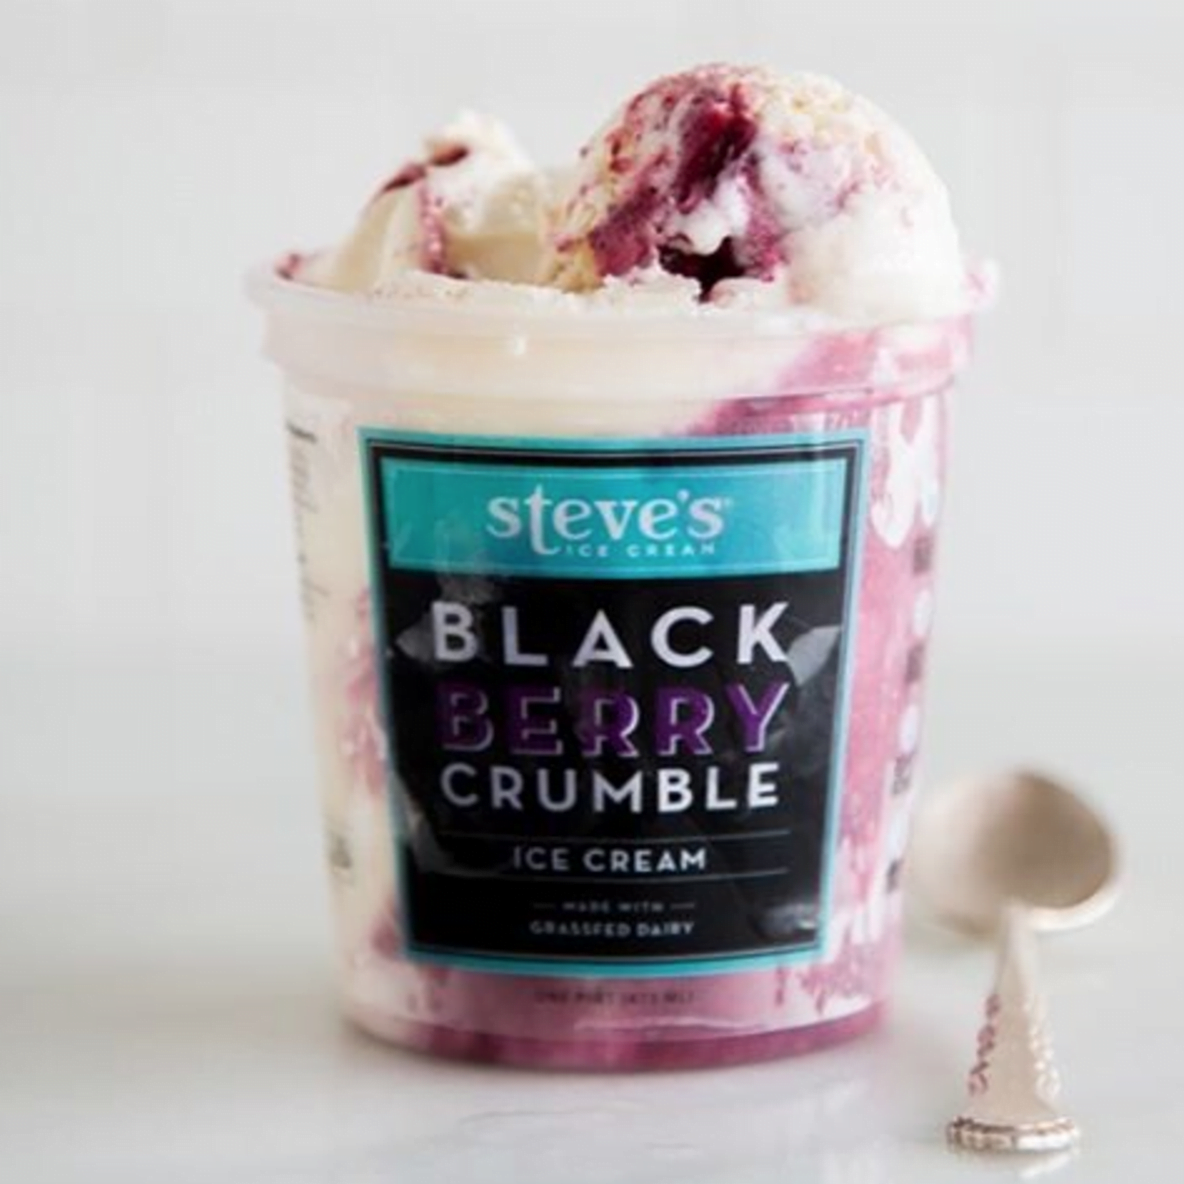 Dining-Steves-Ice-Cream-Desserts-Black-Berry-Crumble